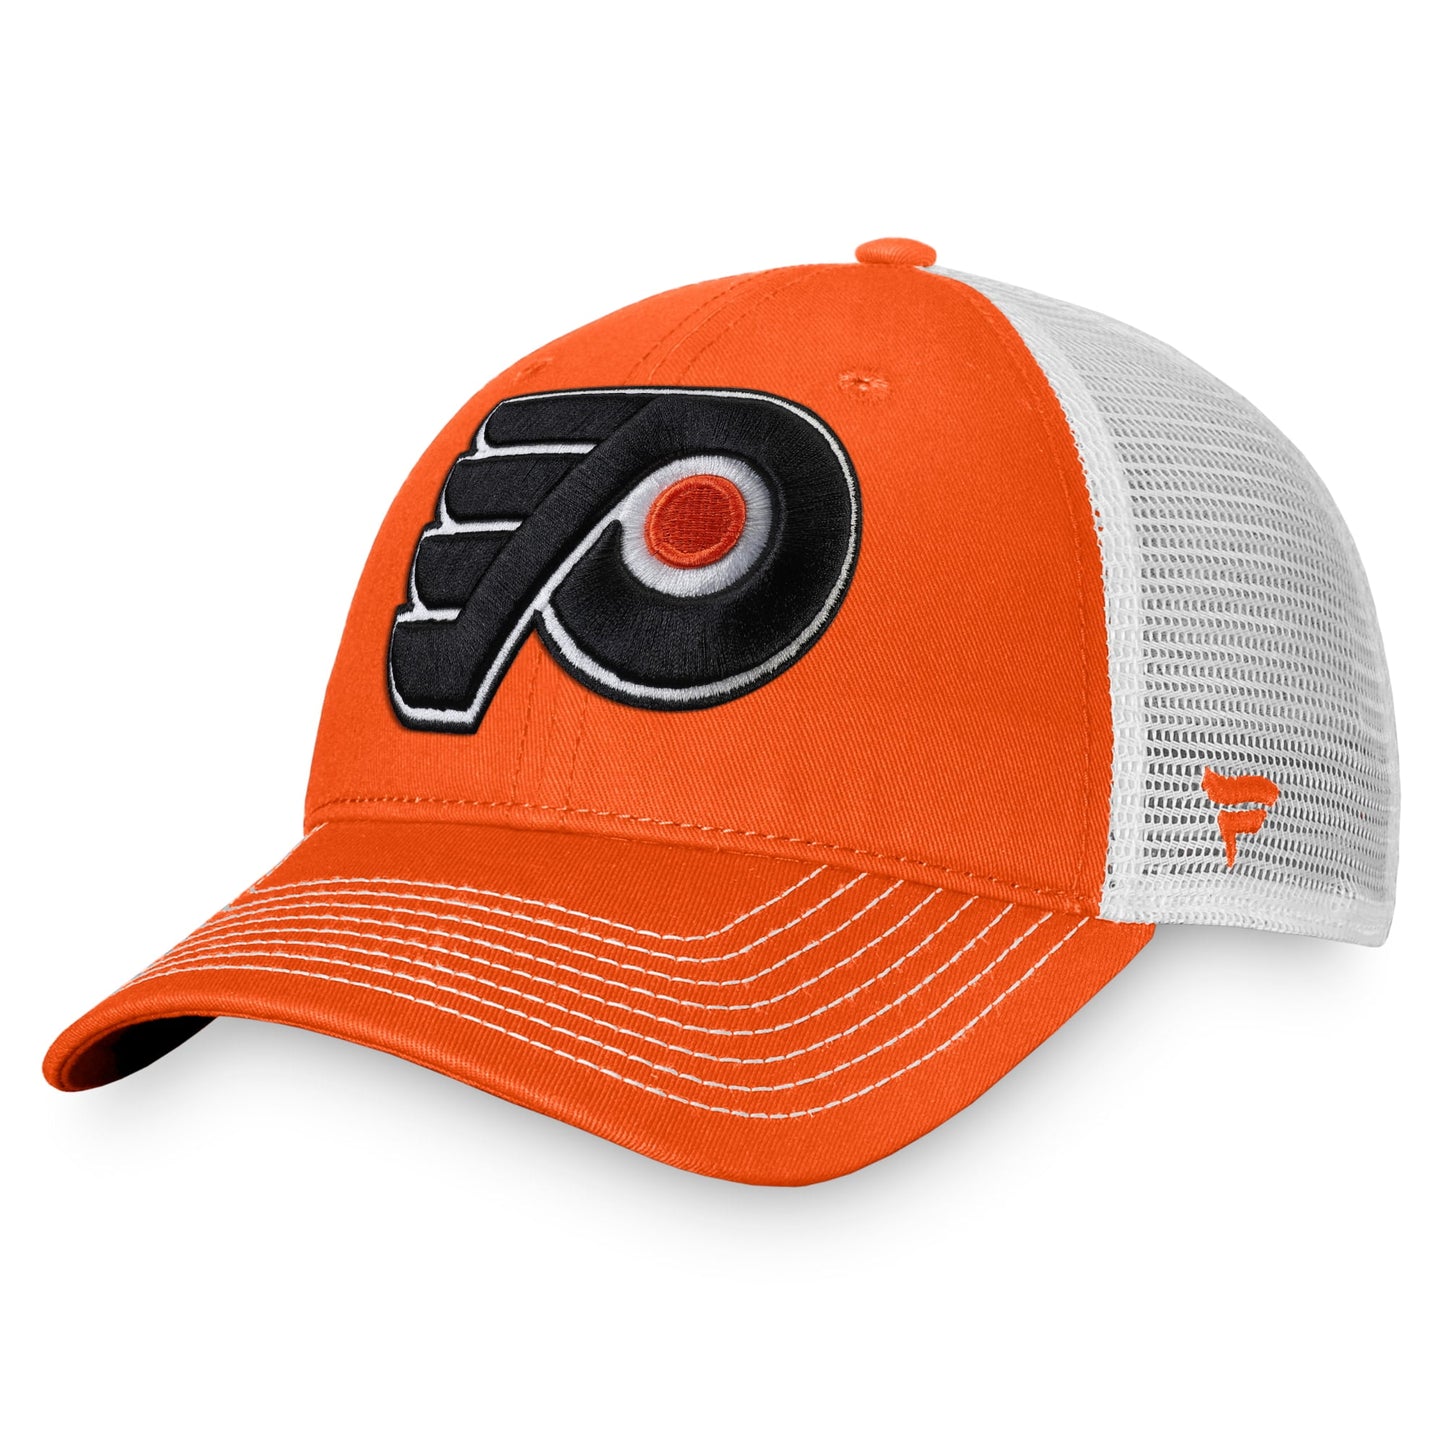 Men's Fanatics Branded Orange/White Philadelphia Flyers Slouch Core Primary Trucker Snapback Hat - OSFA